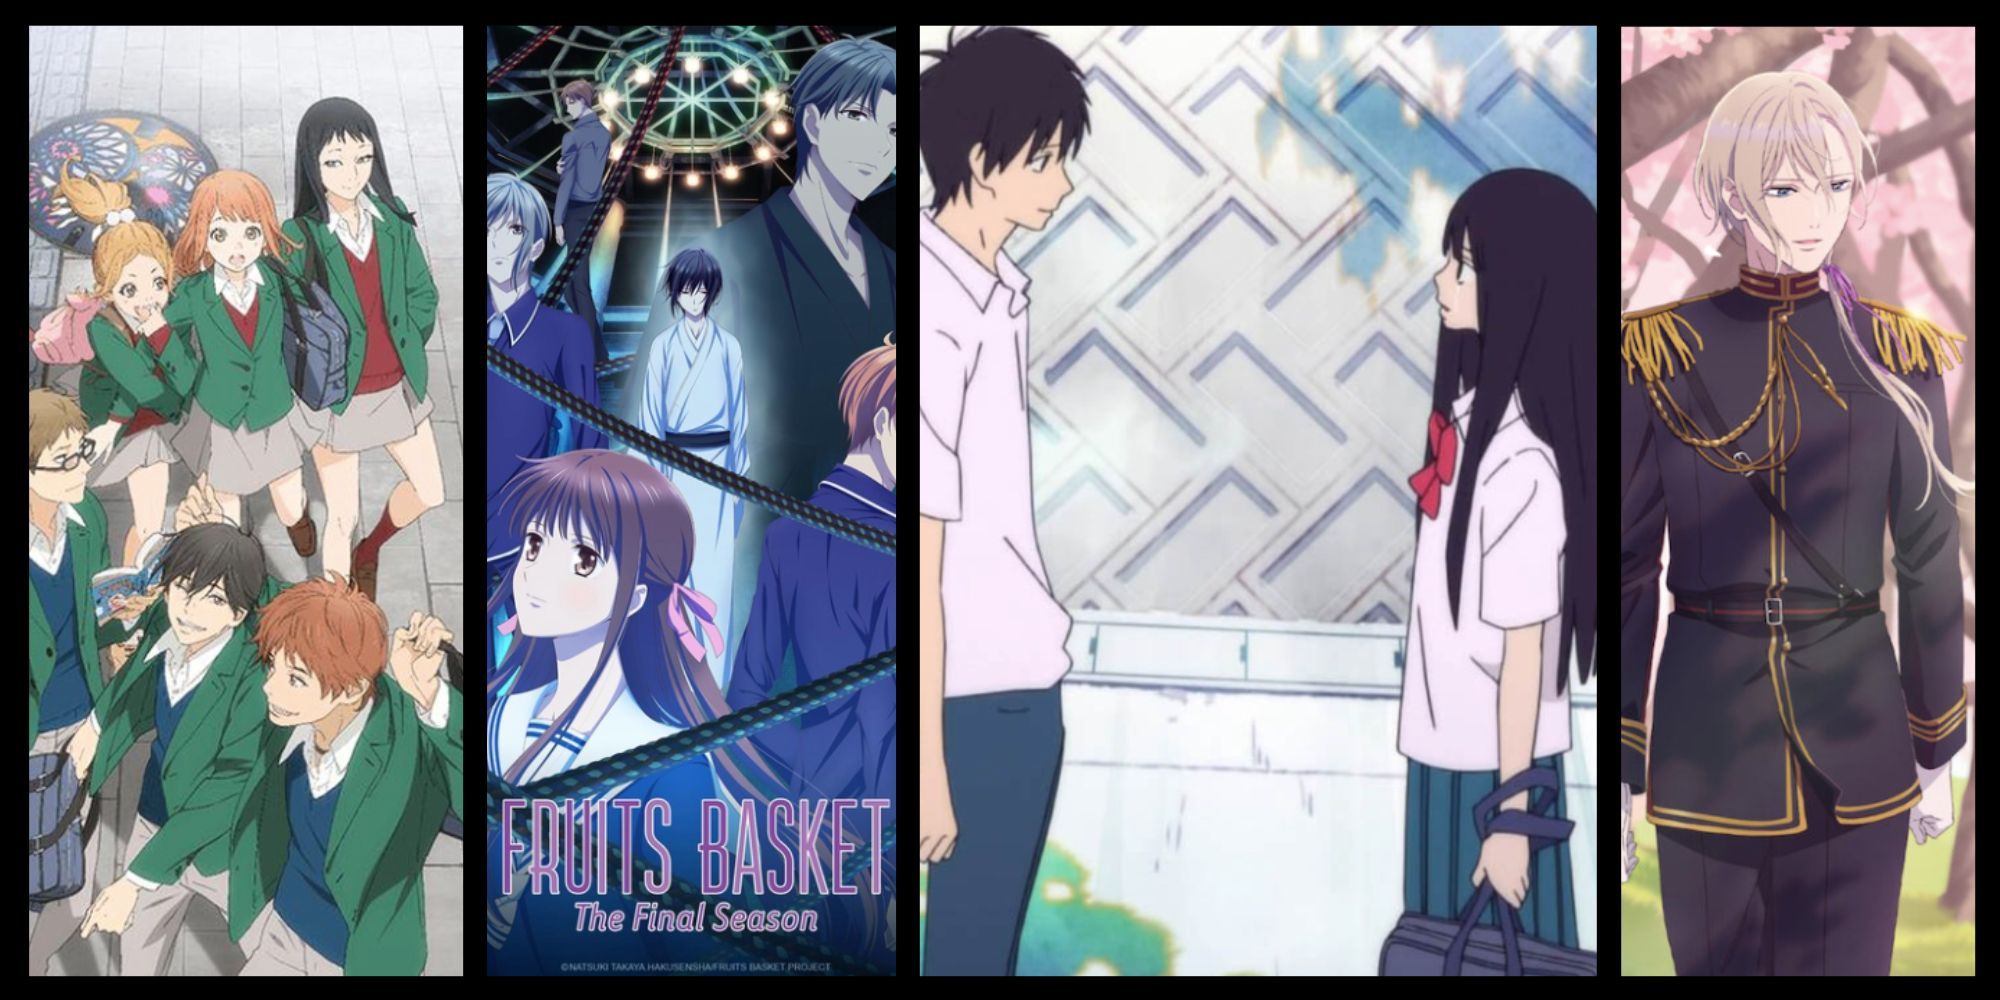 Funimation: Tokyo Ghoul:re, Fruits Basket e Sword Art Online para